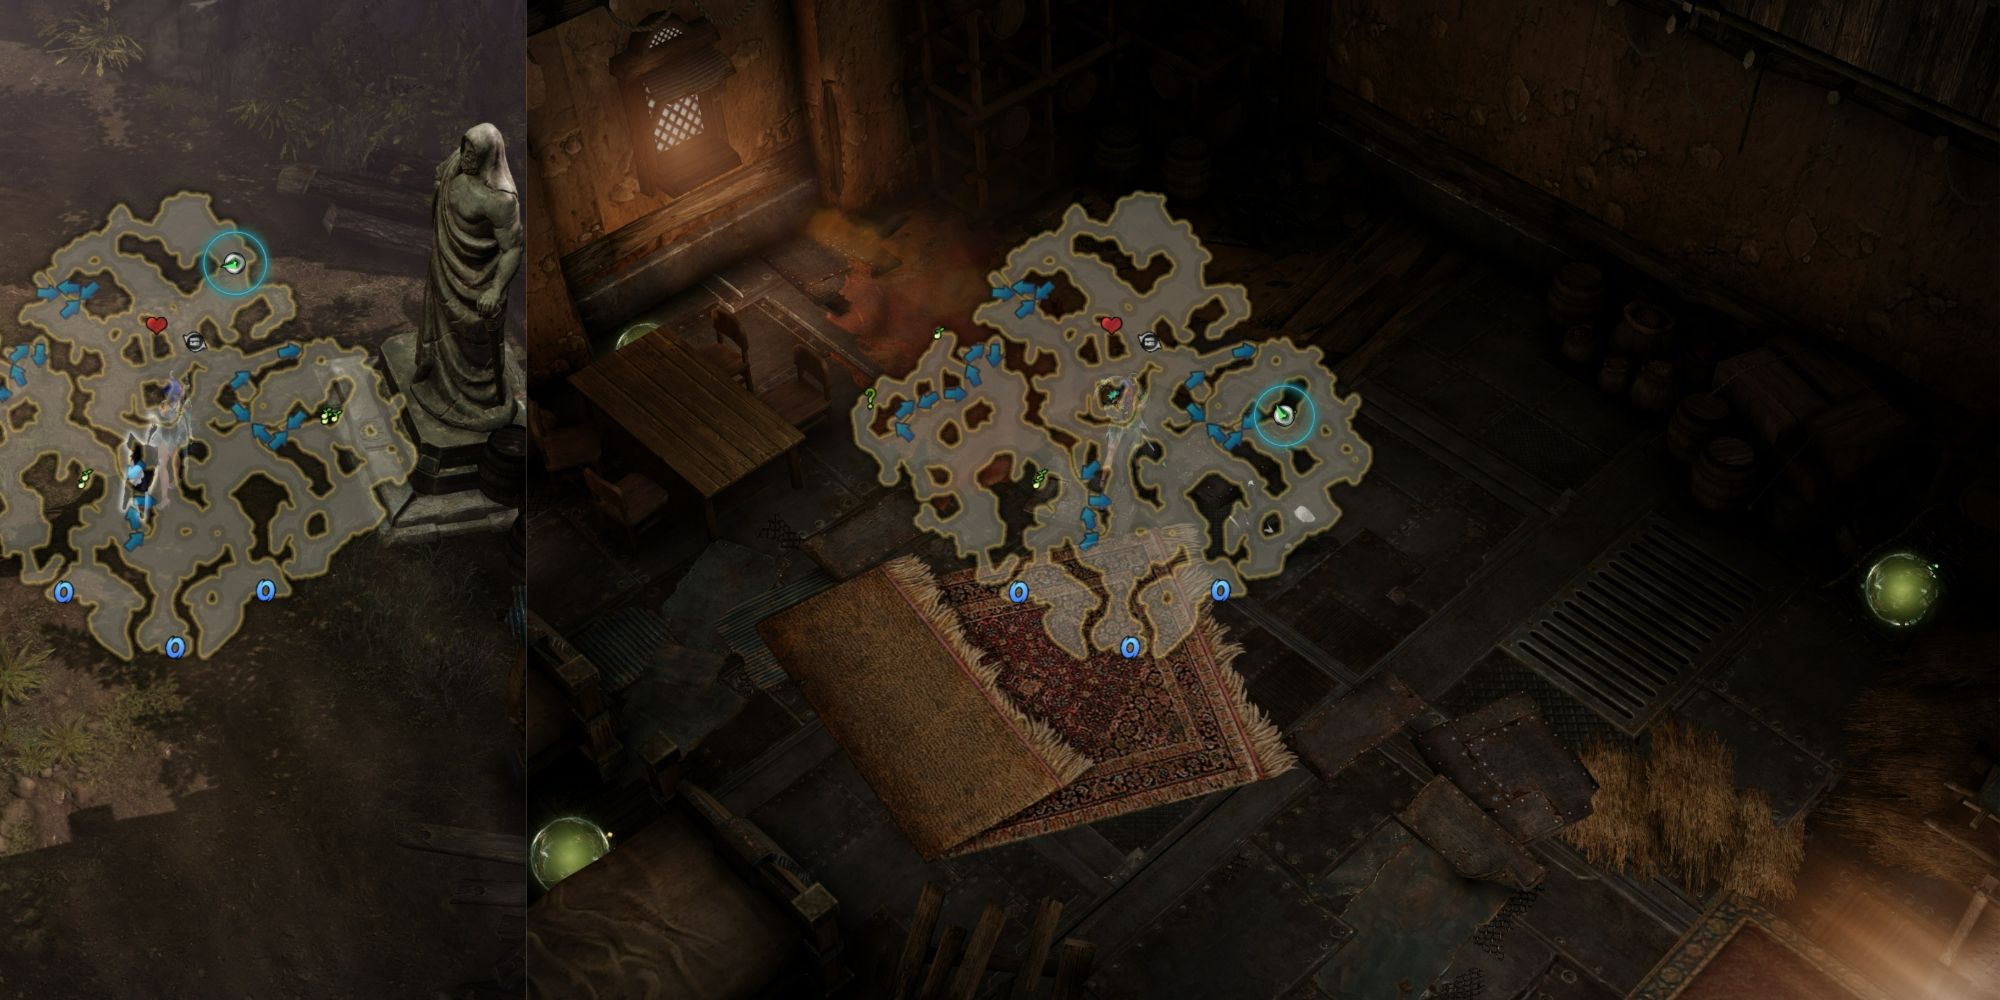 Lost Ark split image of Runaways Island Mokoko Seeds 4, 5, 6 location with minimap open and their hidden entrance